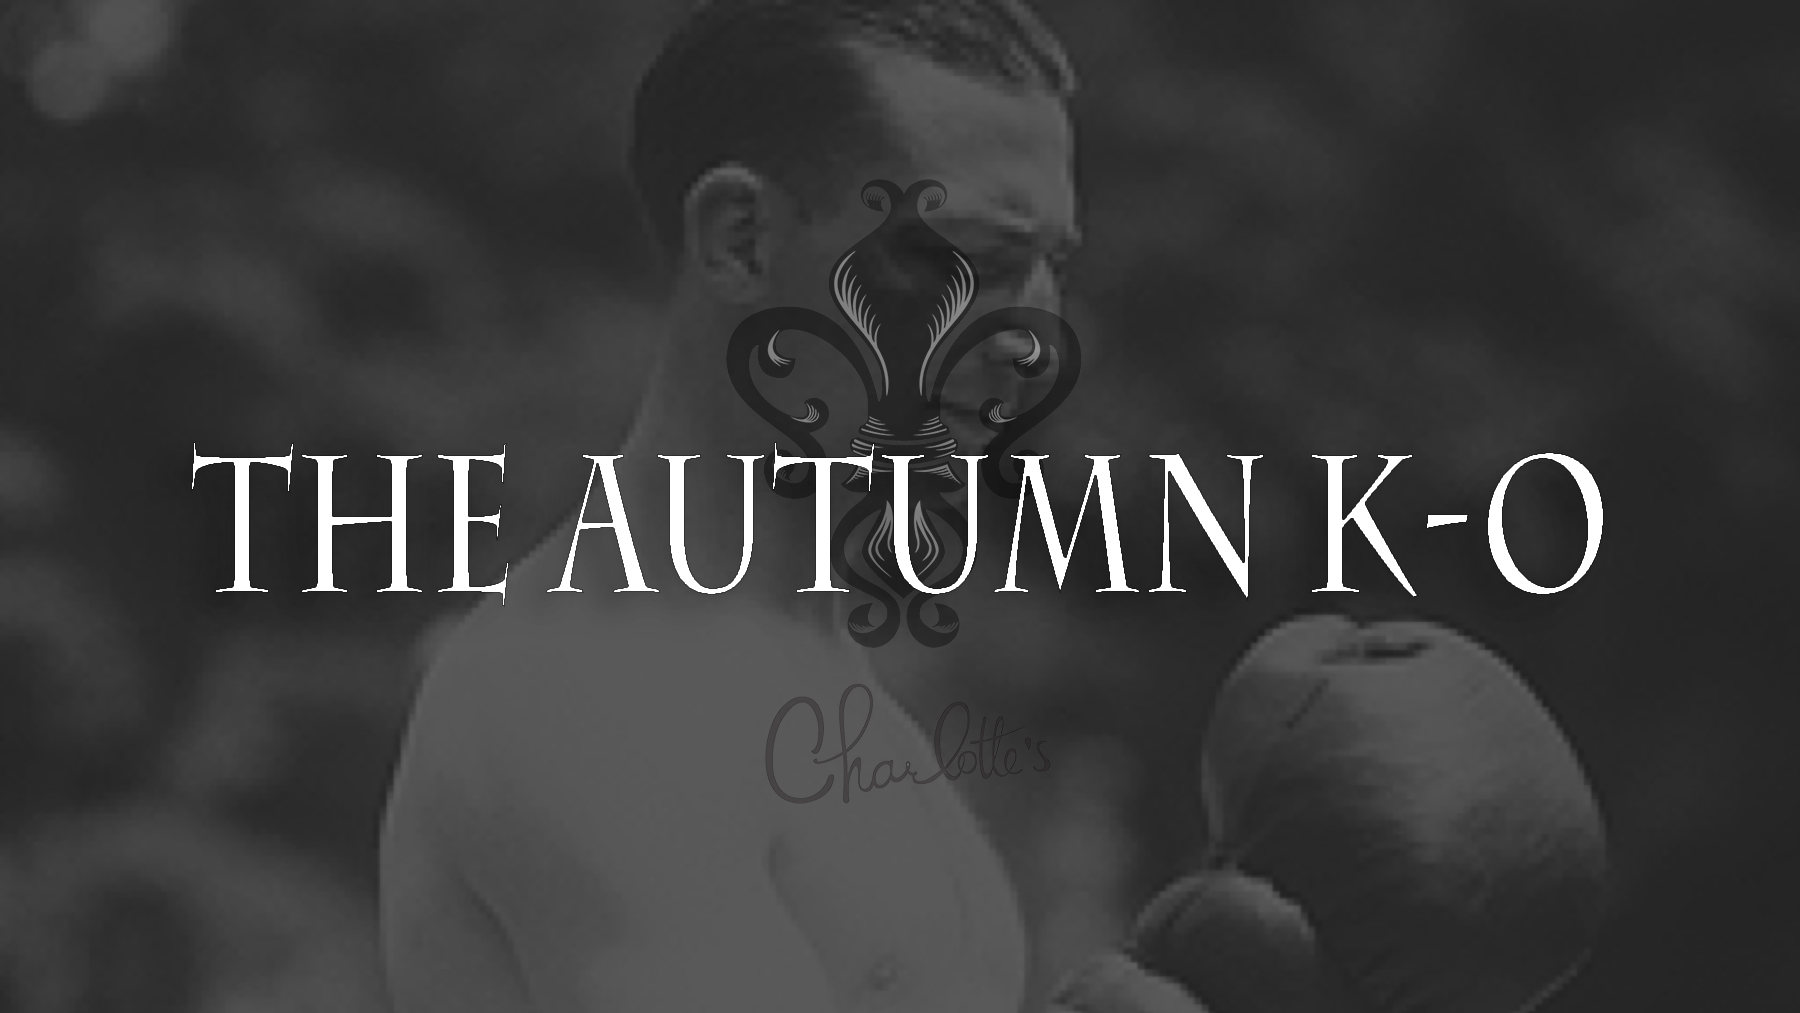 The Autumn K-O